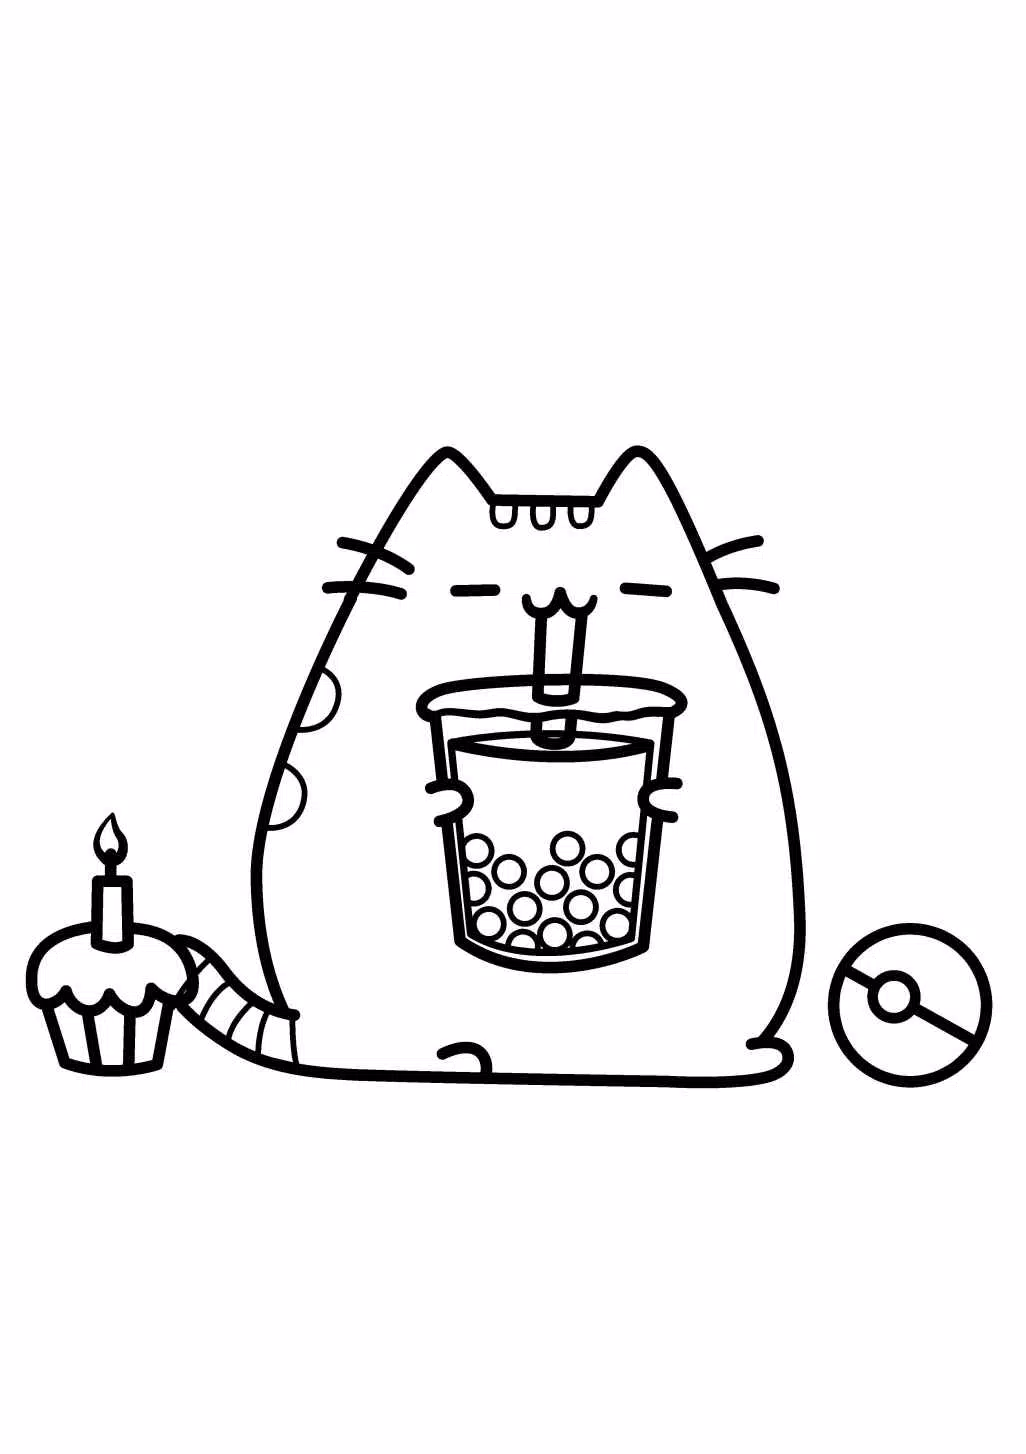 Come disegnare un gatto Pusheen for Android - APK Download